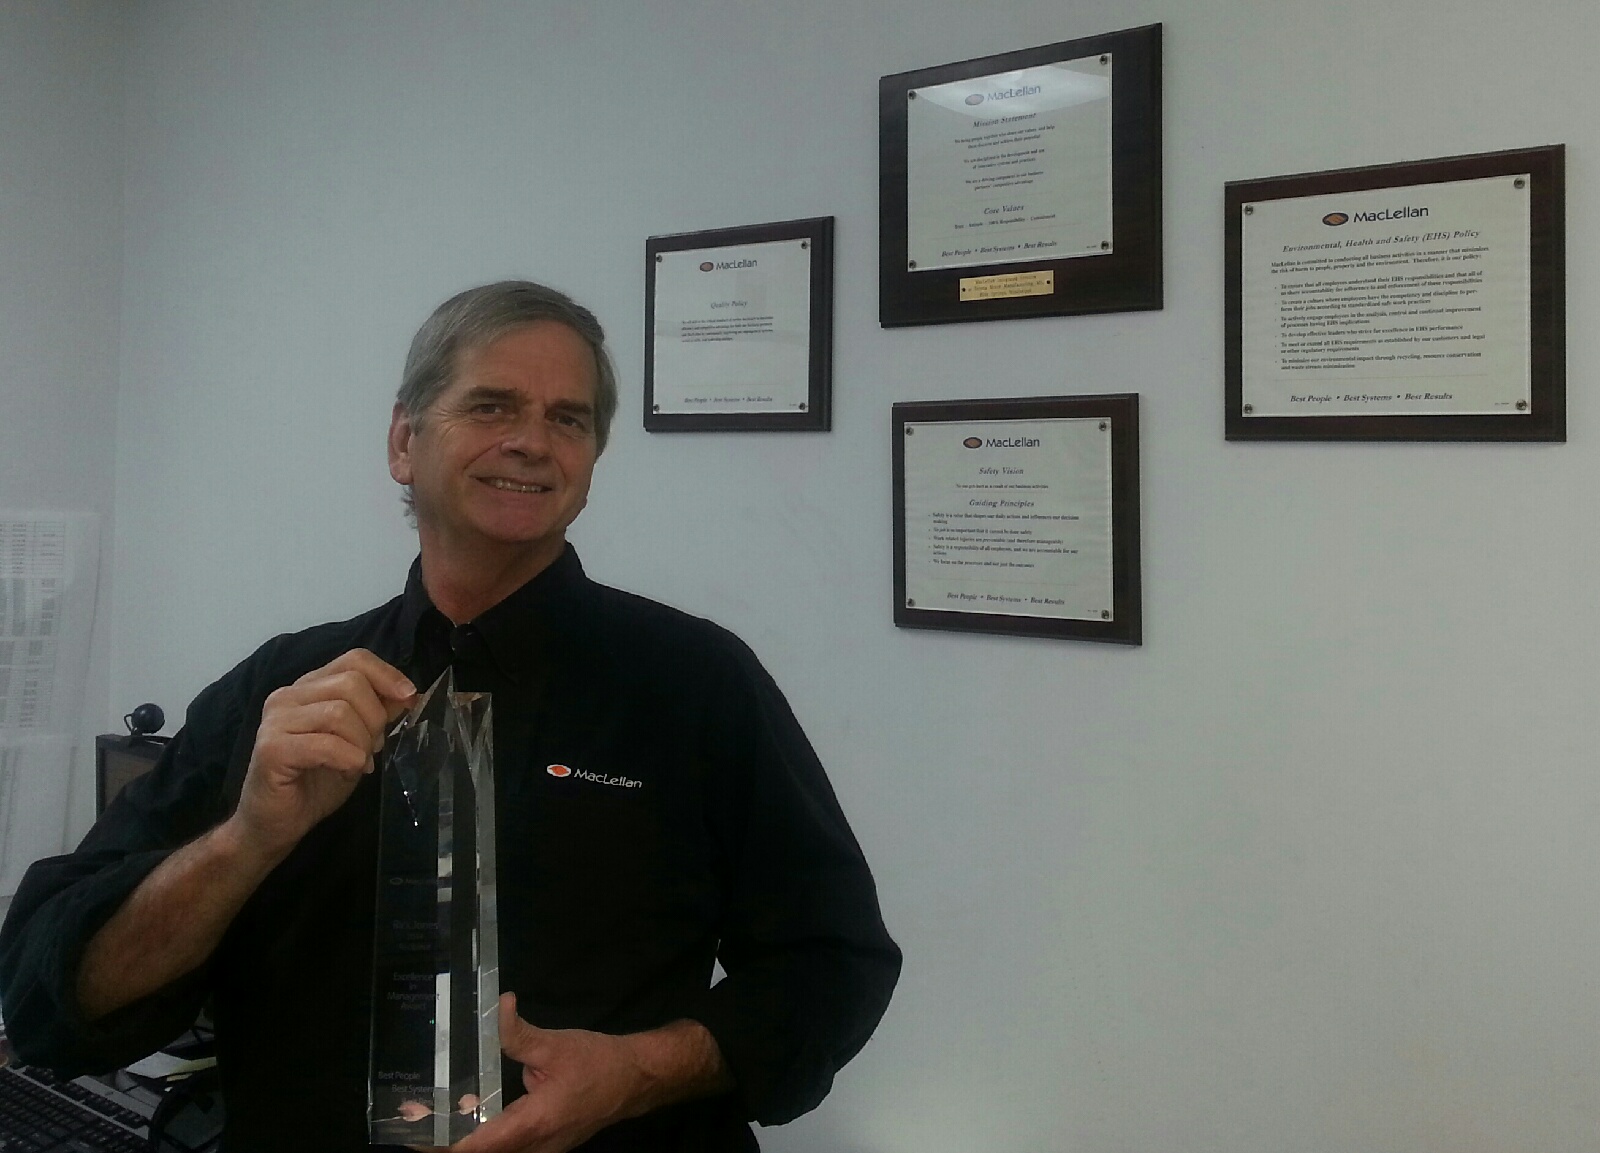 Rick Jones is awarded with the 2014 MacLellan Leadership Award.